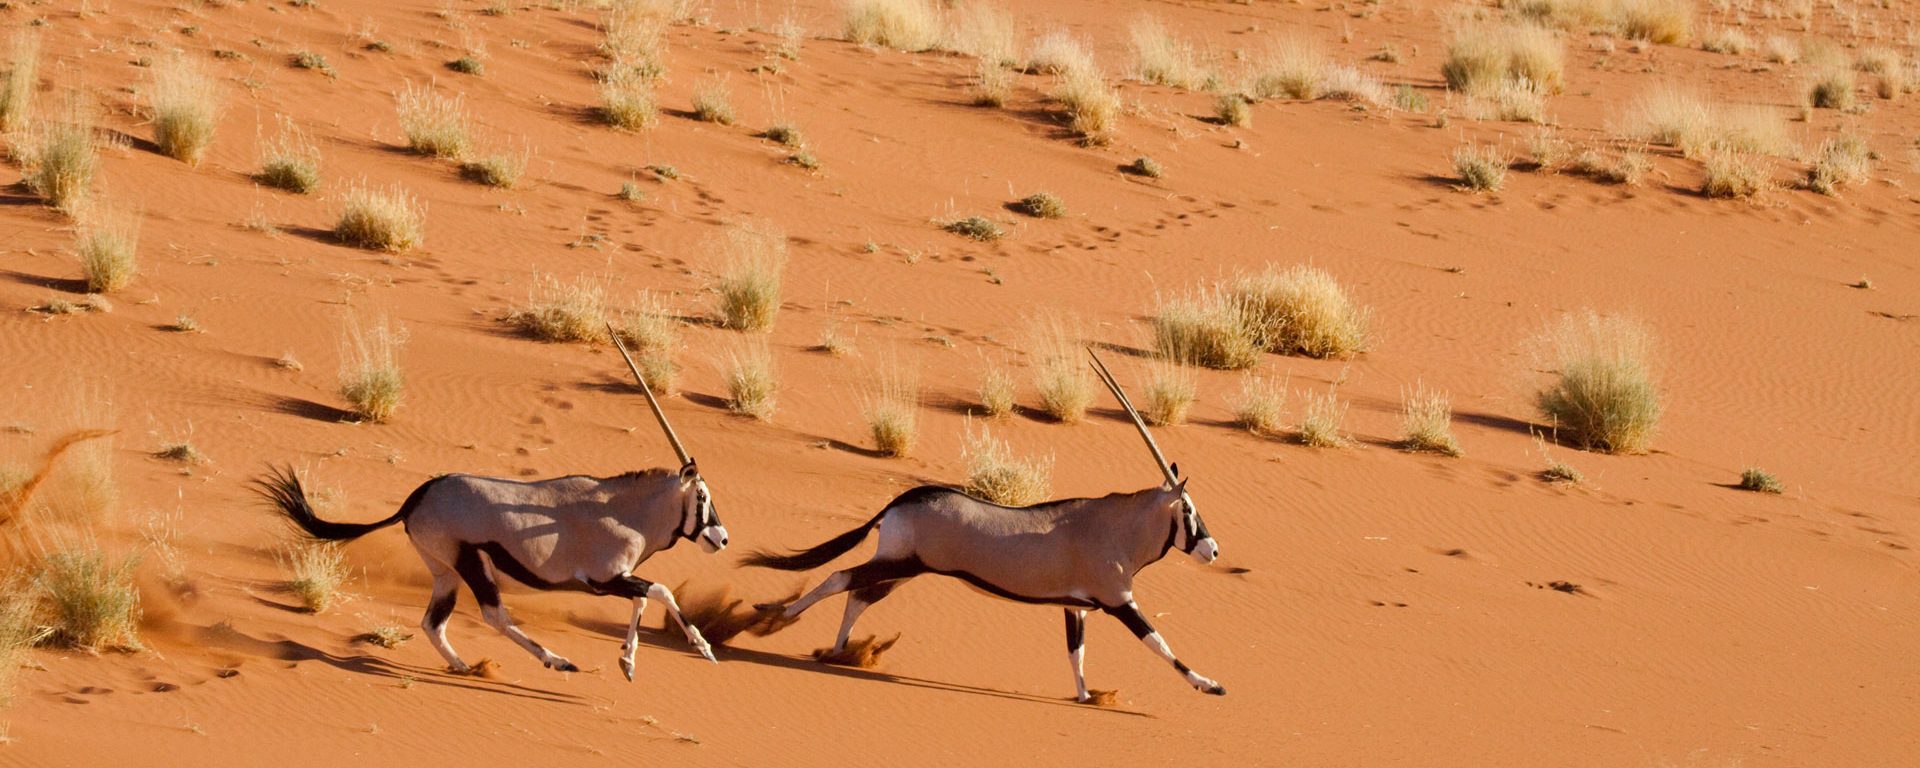 A pair of oryx running near Dead Vlei, Sossusvlei, Namibia